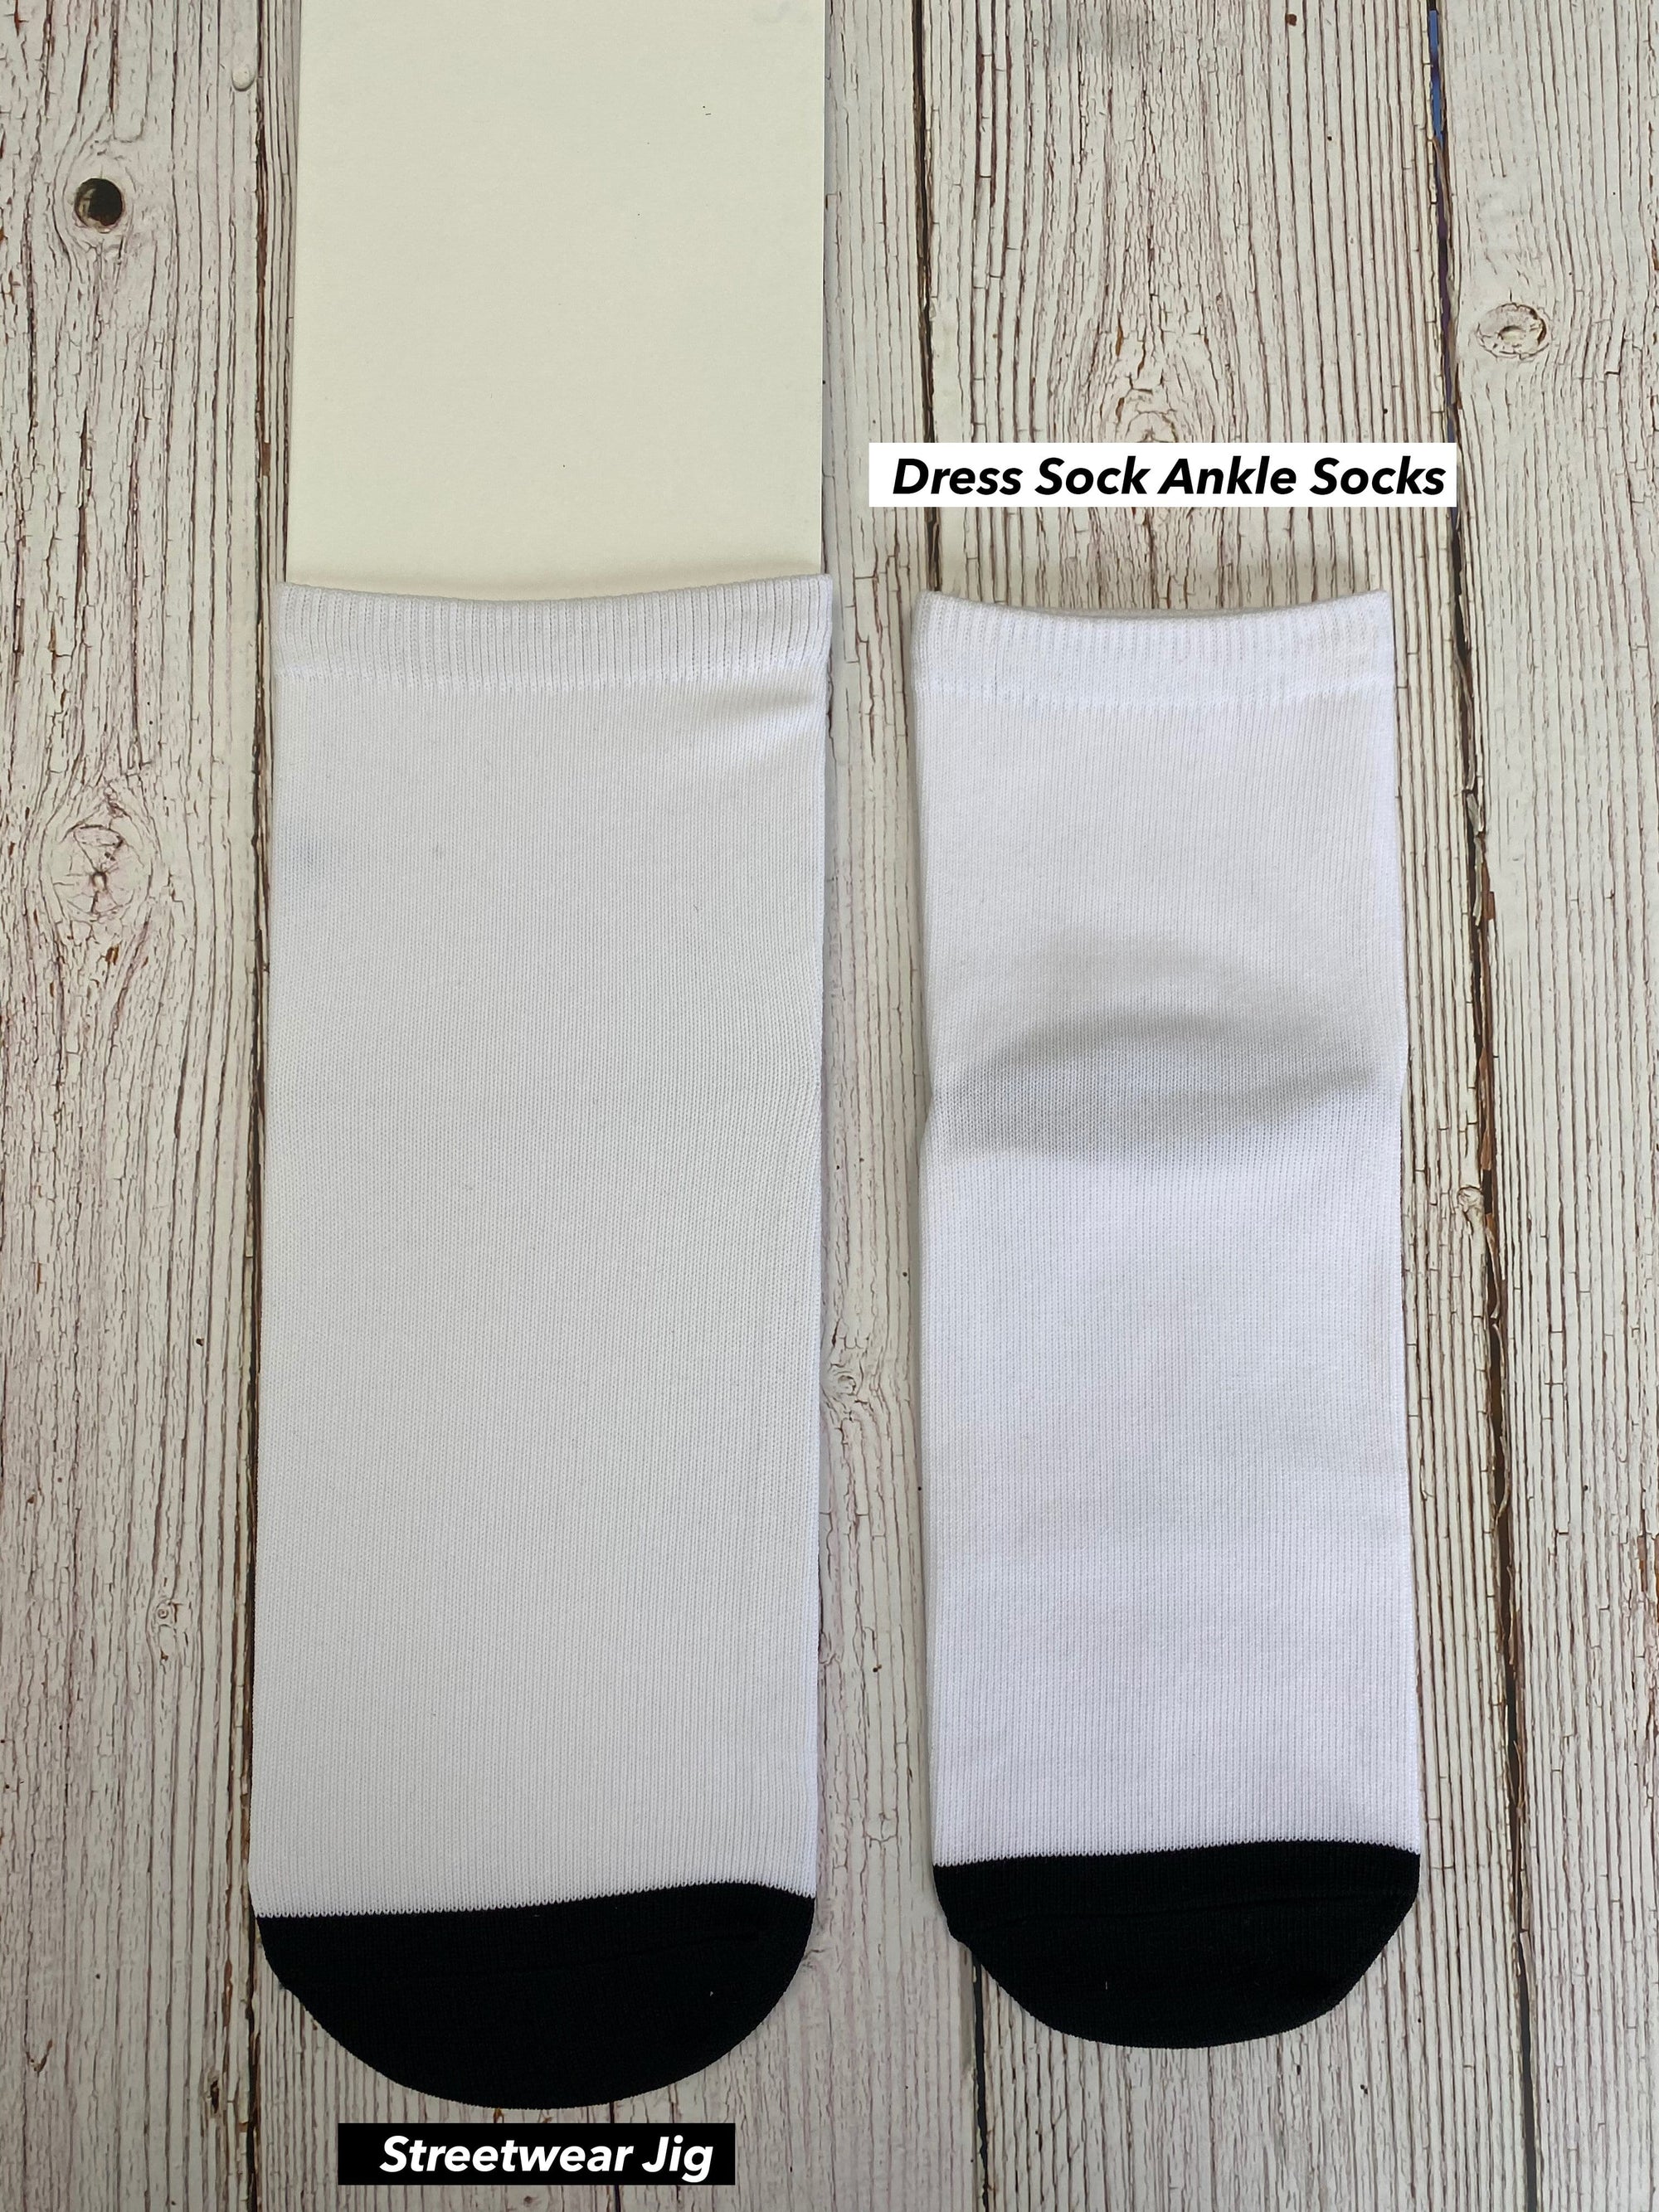 Inserts/Jigs for Streetwear and Dress Socks